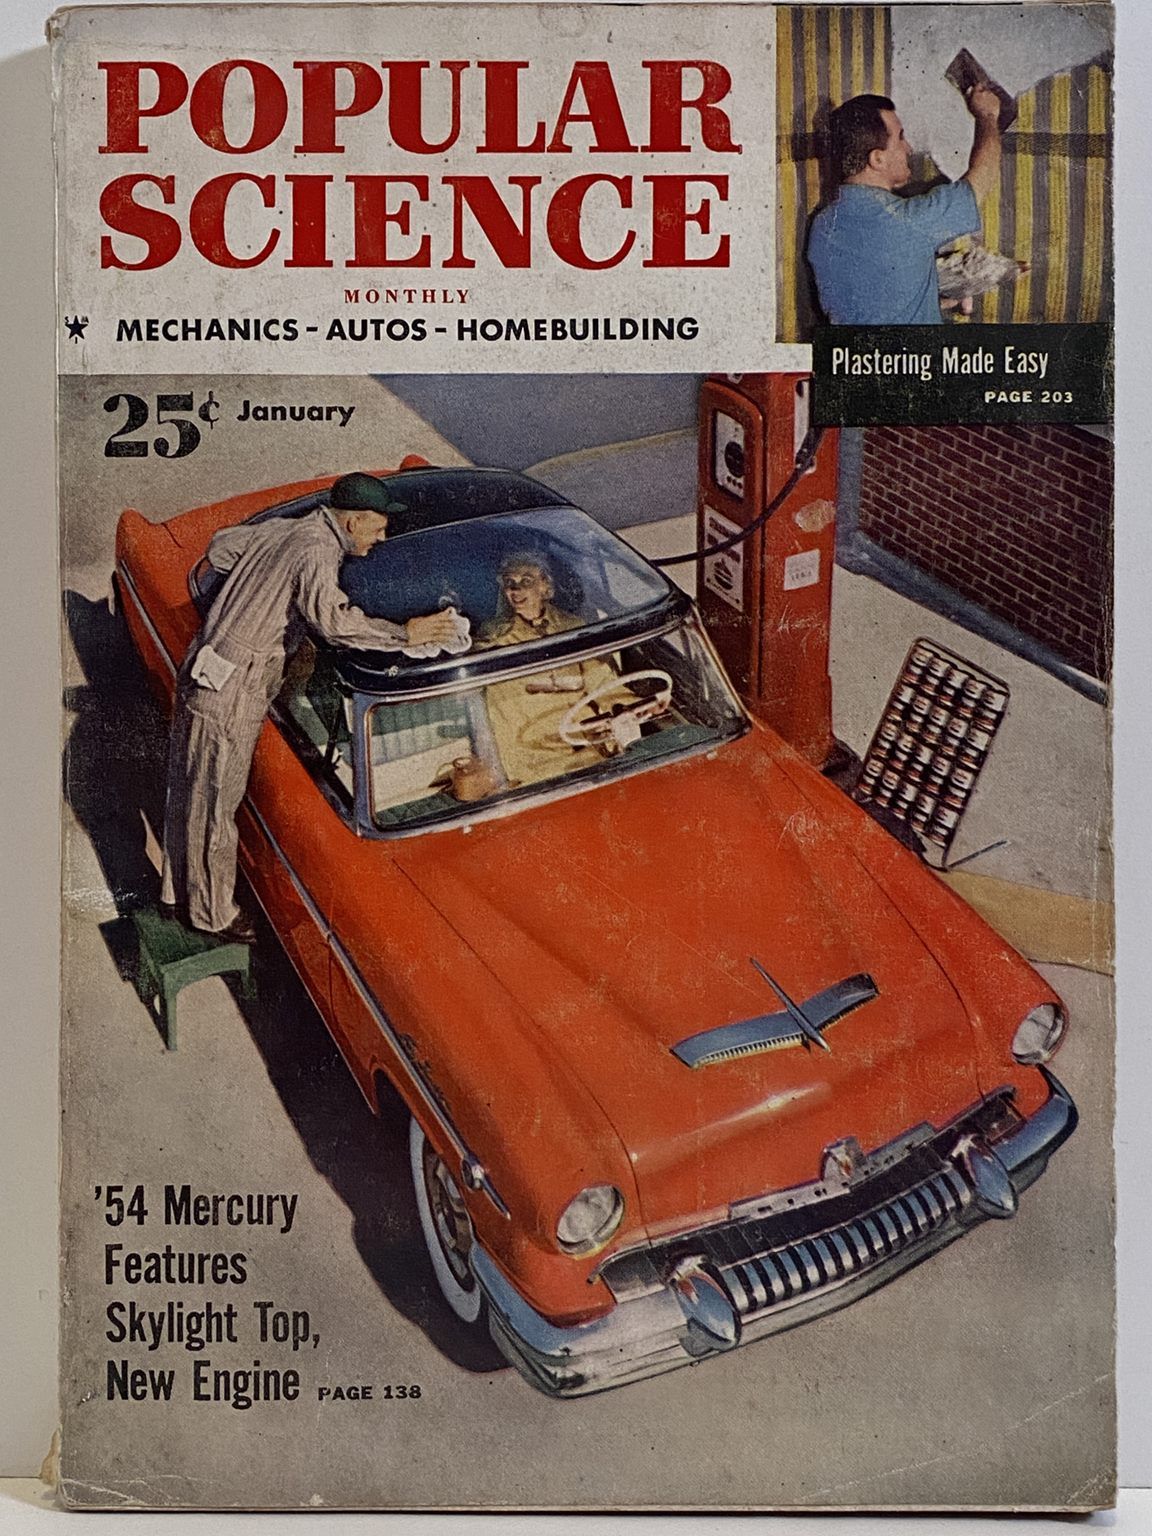 VINTAGE MAGAZINE: Popular Science, Vol. 164, No. 1 - January 1954